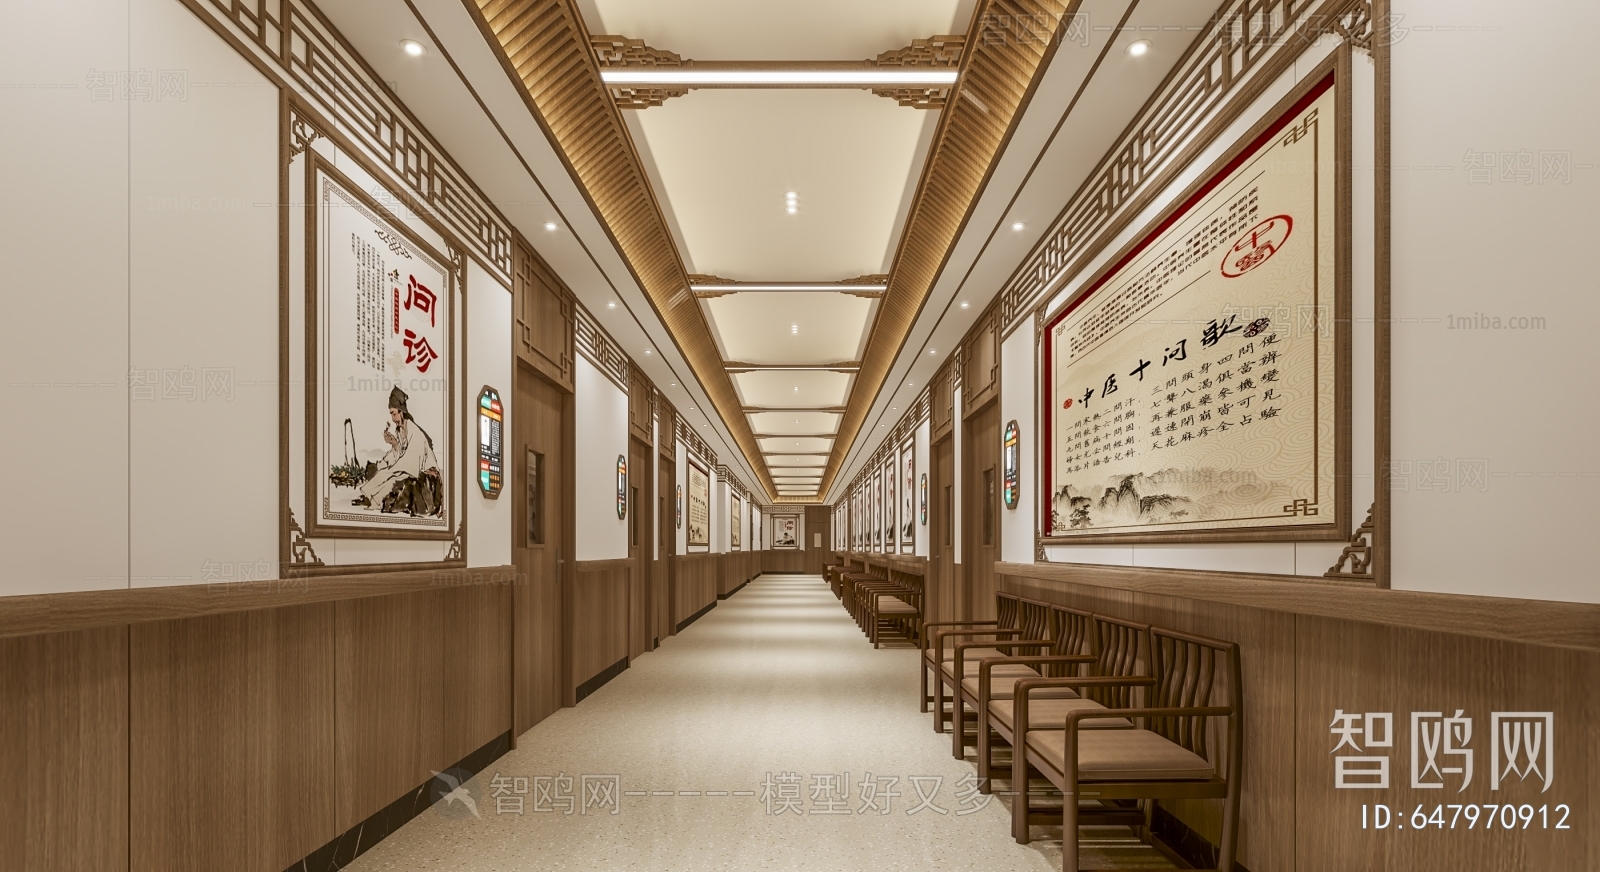 New Chinese Style Hospital